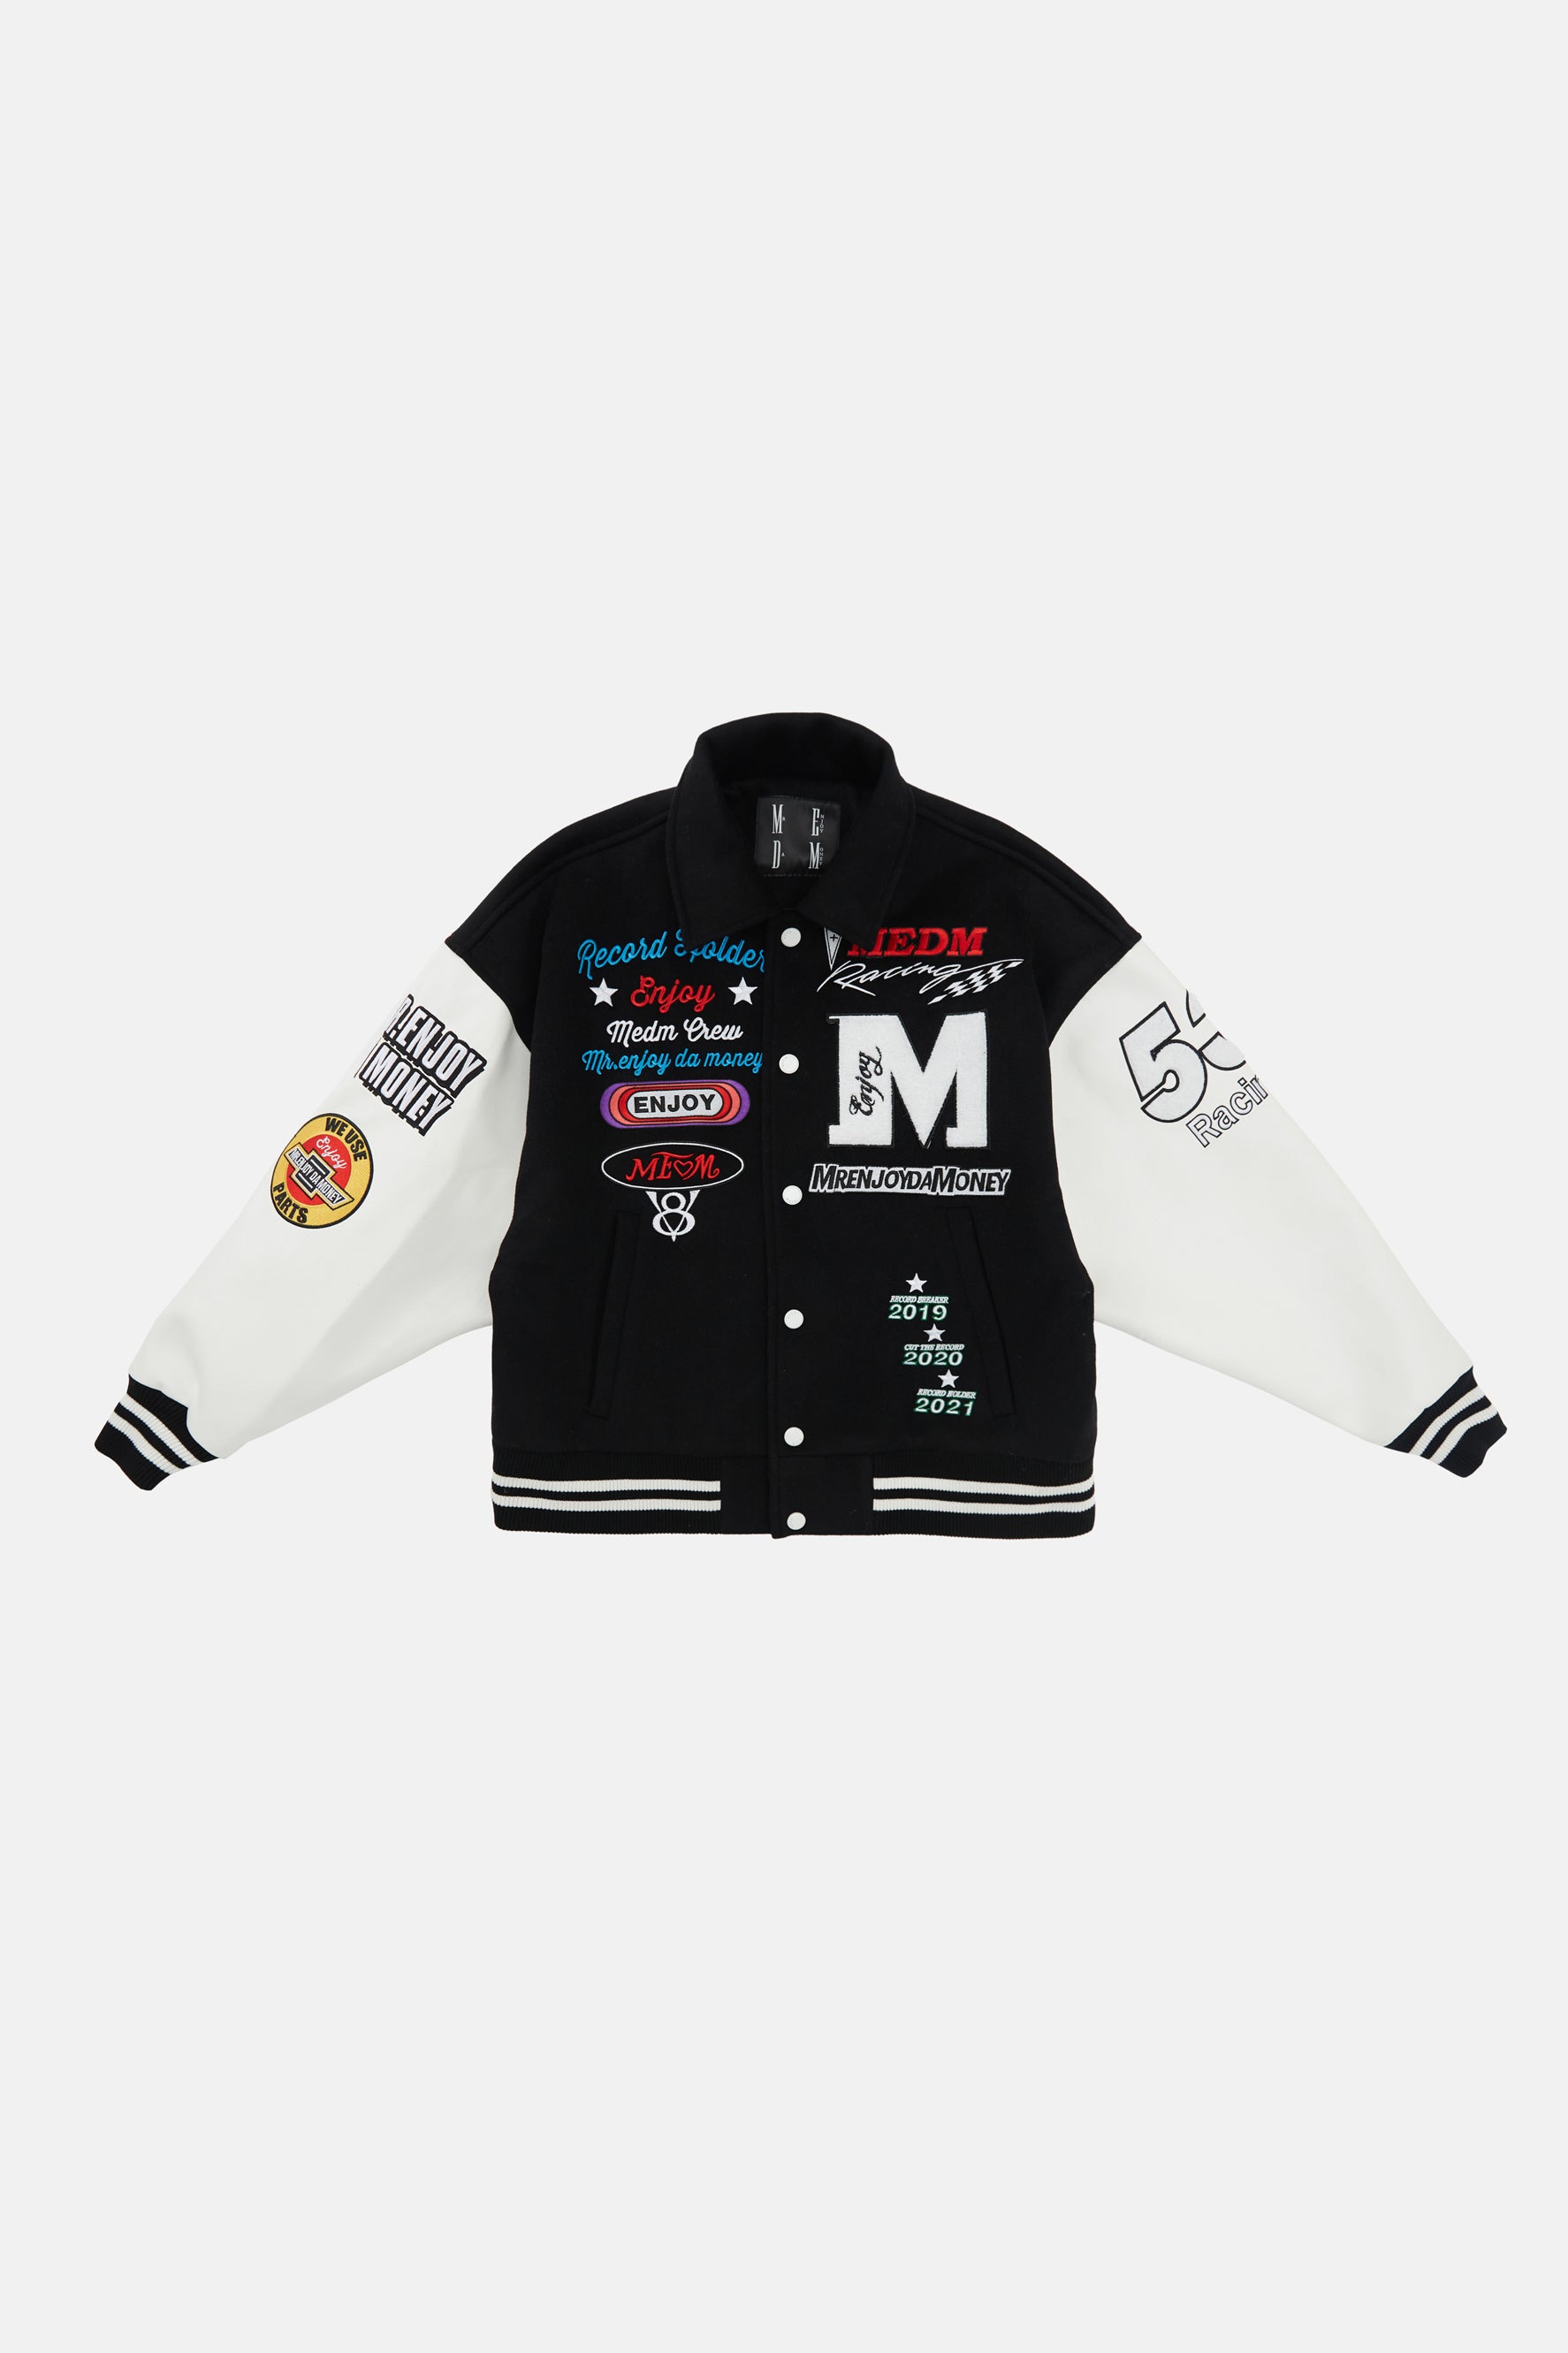 MEDM X Head Text D Co branded  Jacket